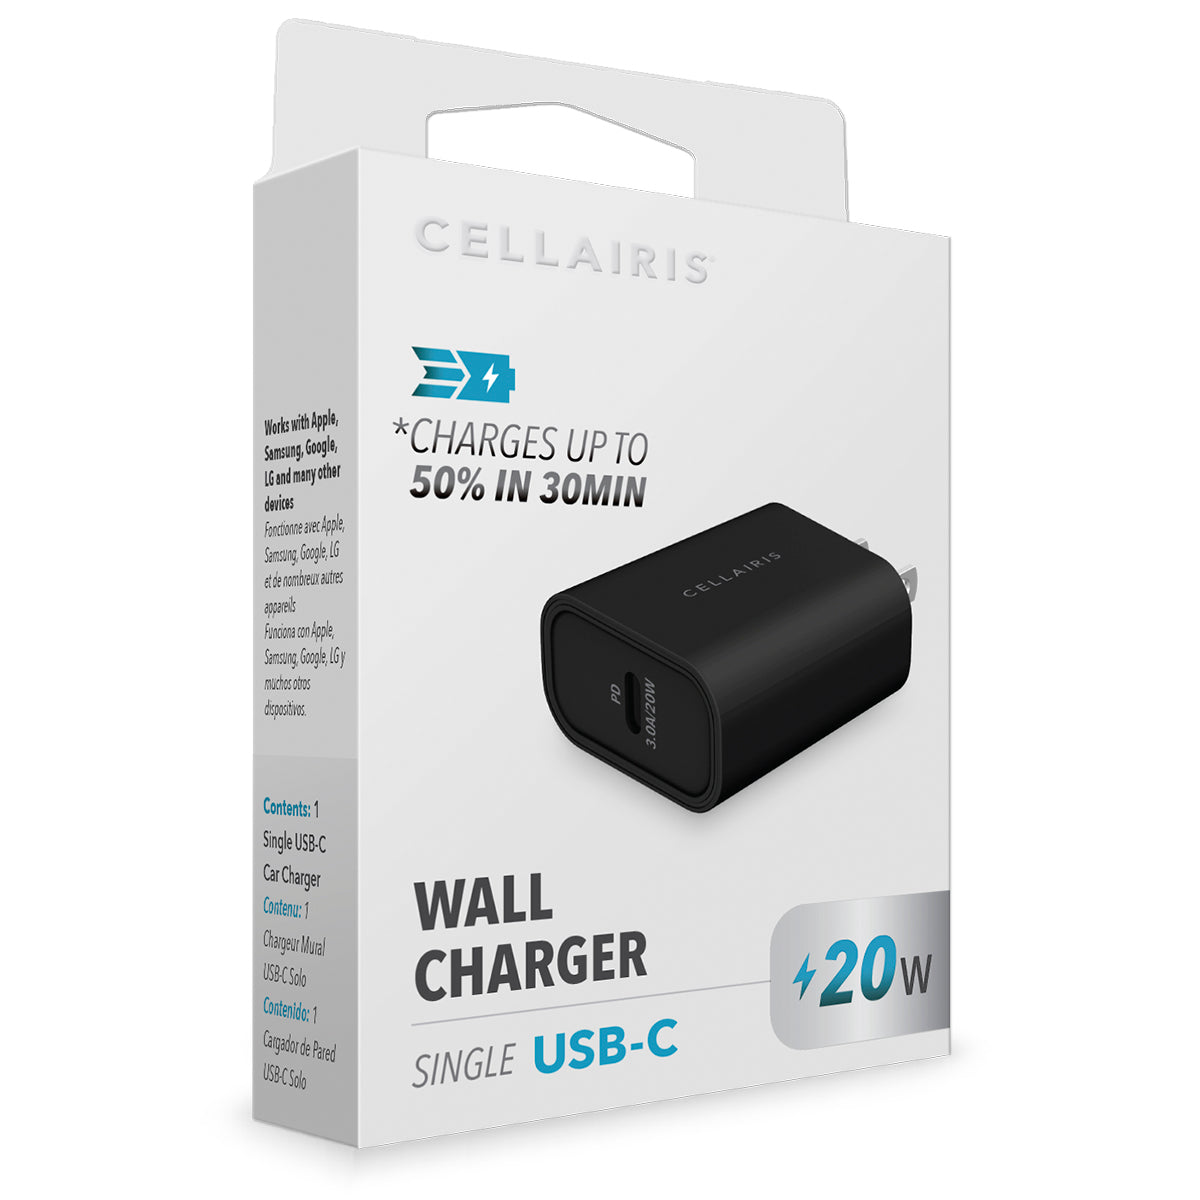 Wall Charger - Single USB-C 3.0A 20W BlackCellairis Wall Charger - Single USB-C 3.0A 20W Black Wall Chargers